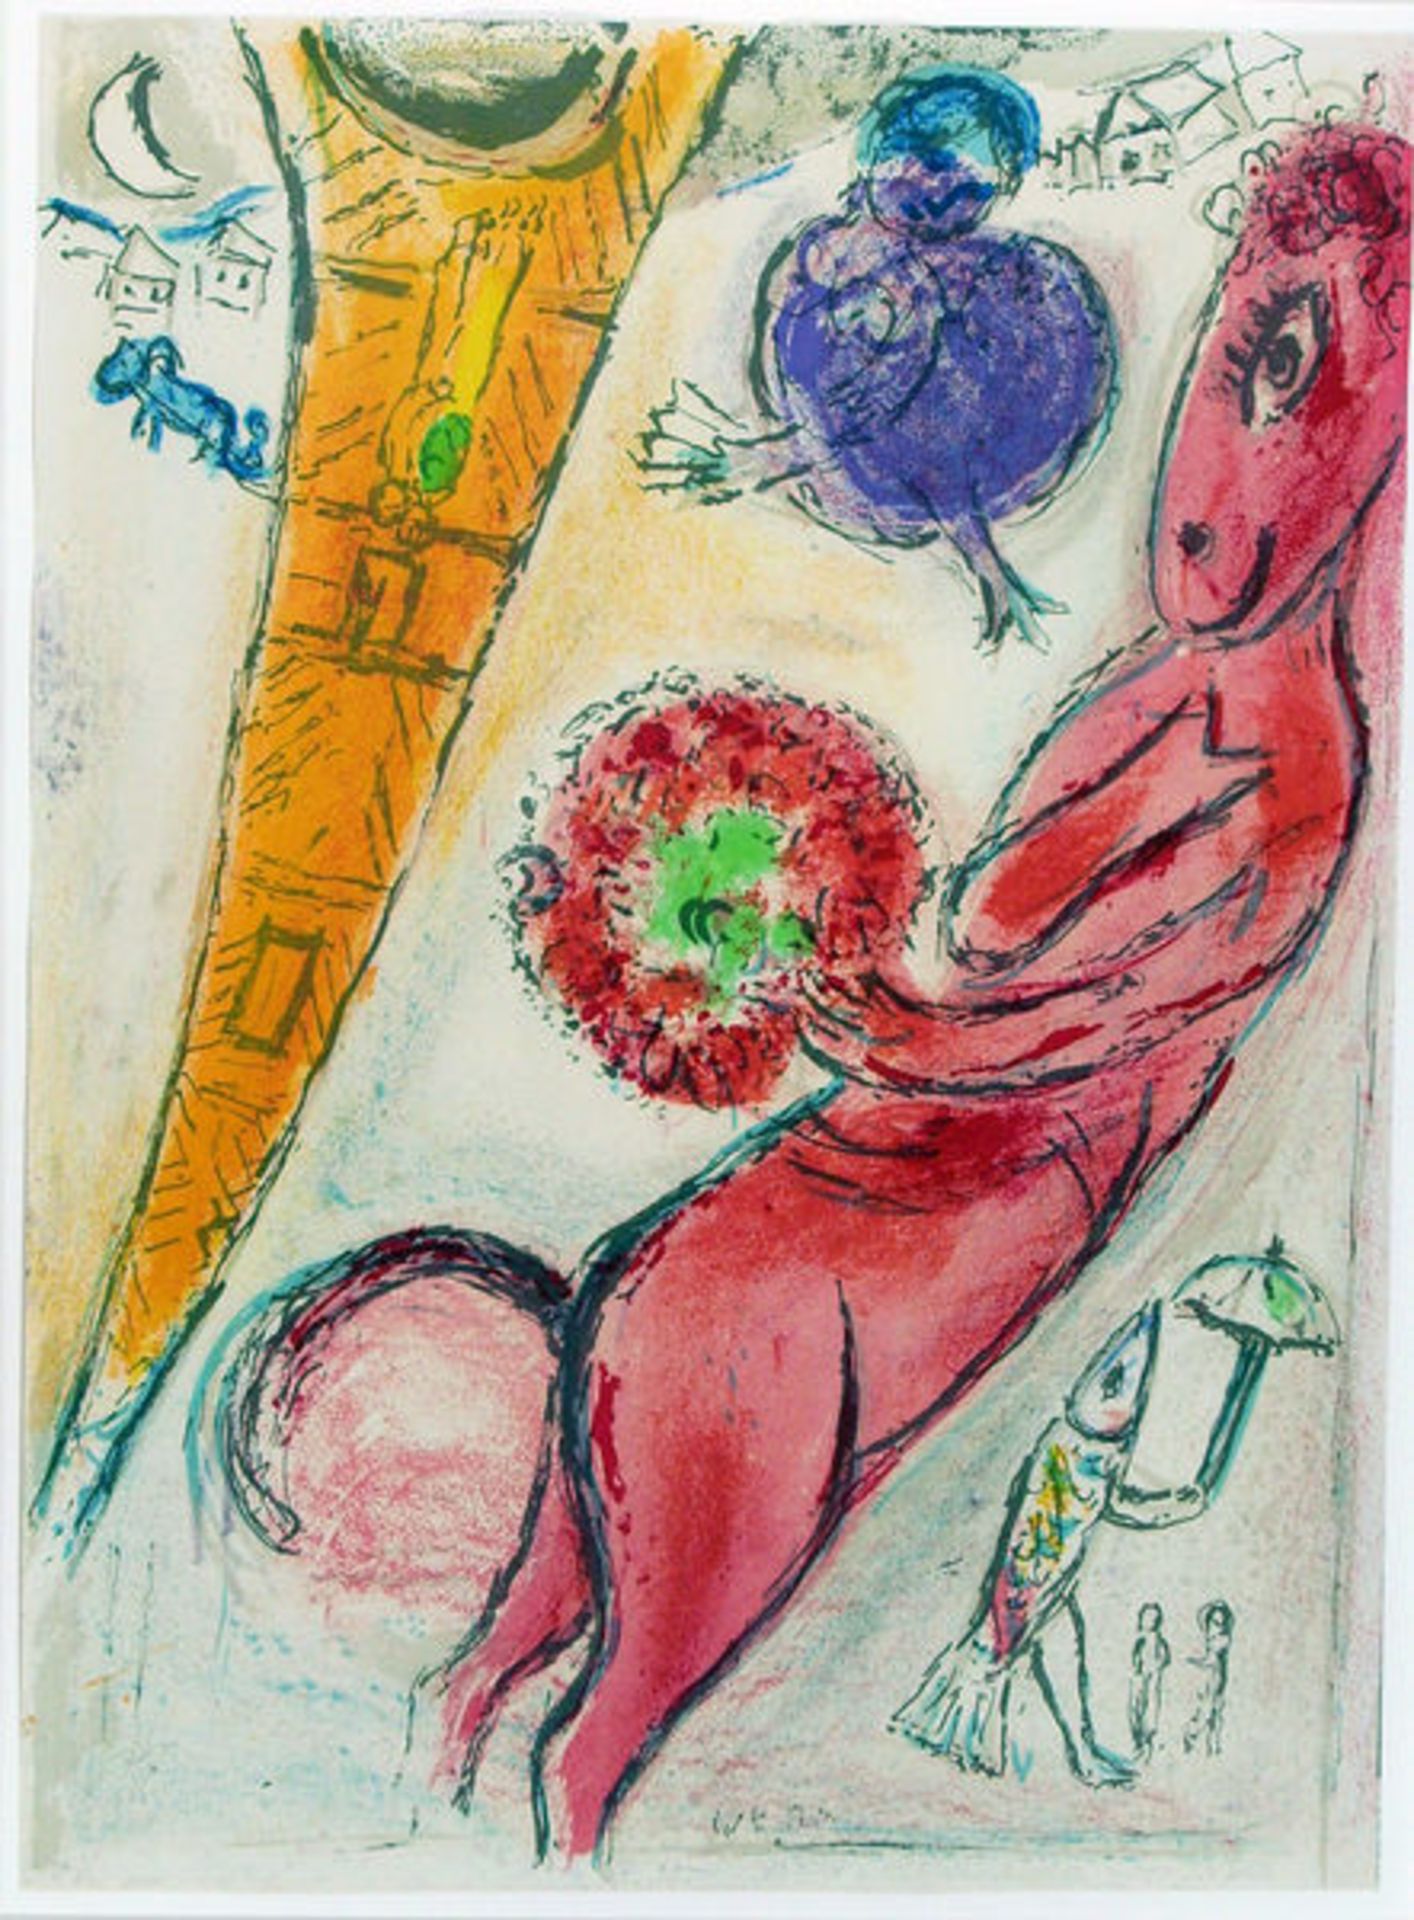 Chagall, Marc
Farblithographie auf Papier, 38,0 × 27,8 cm.
Eifelturm und Esel (1954)Mourlot 97.